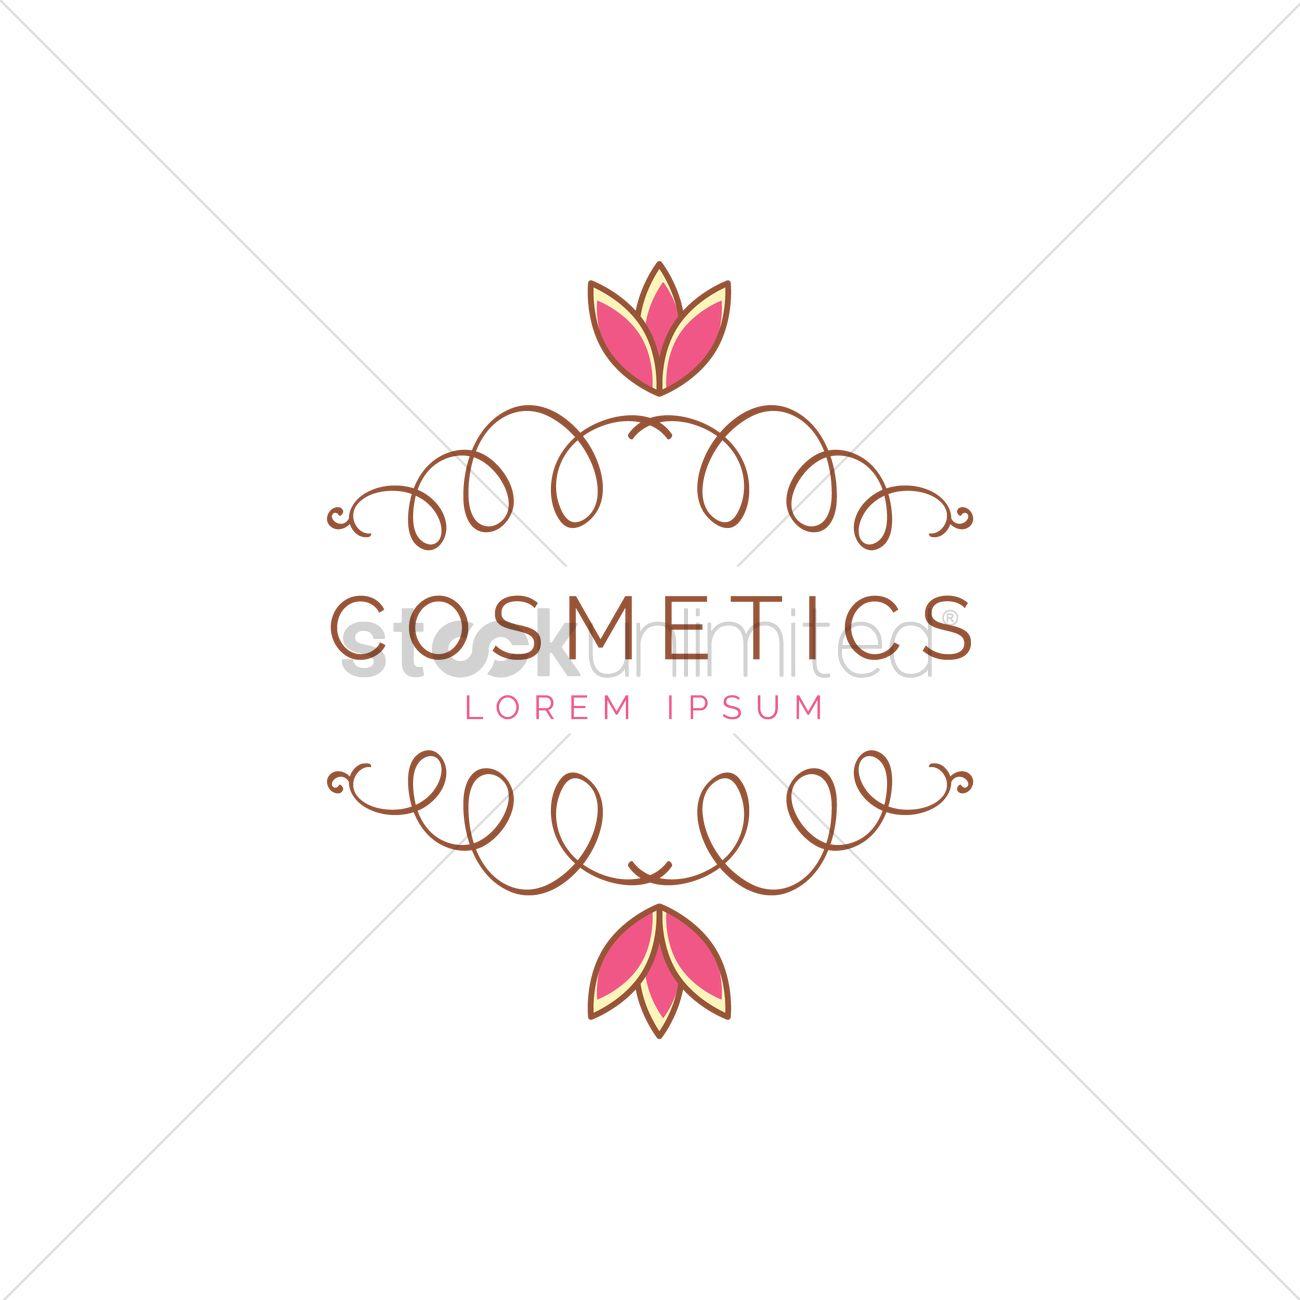 Cosmetics Logo - Cosmetics logo element Vector Image - 1825411 | StockUnlimited